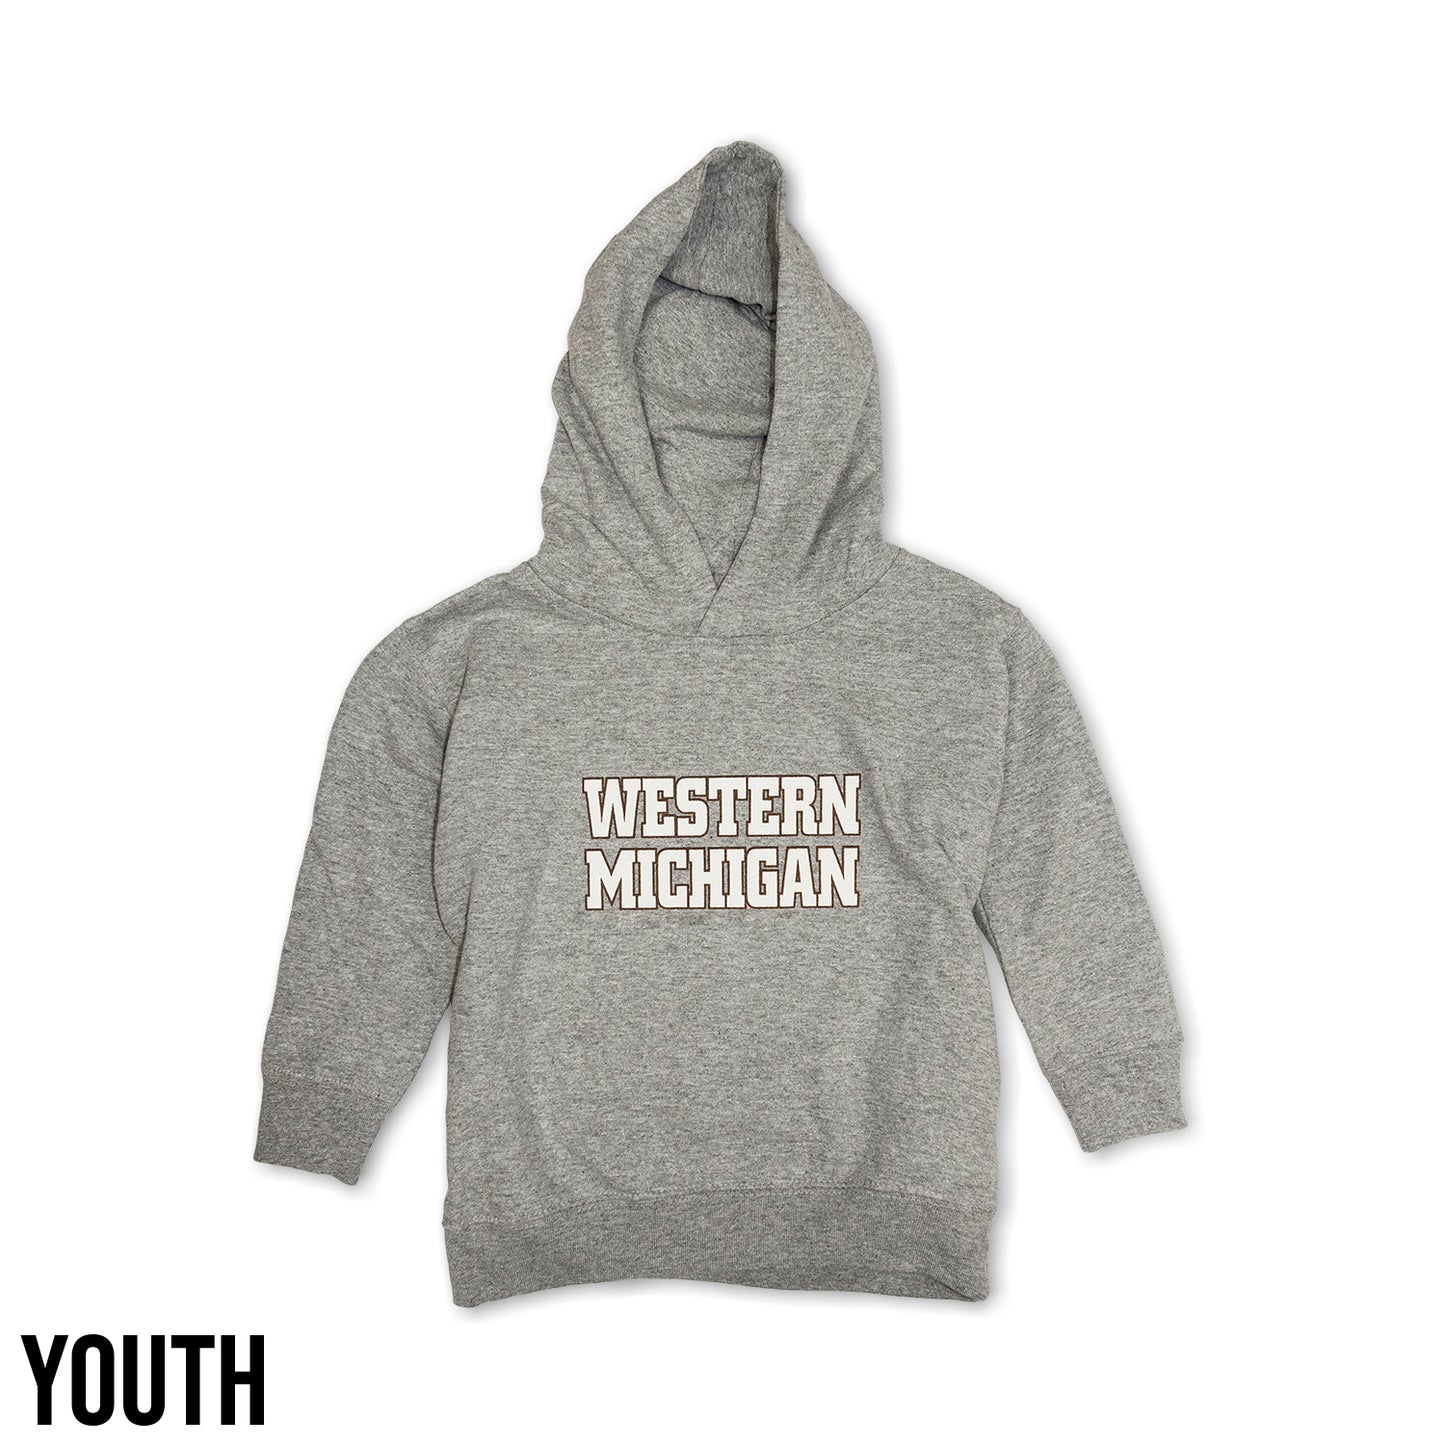 Western Michigan Youth Hoodie